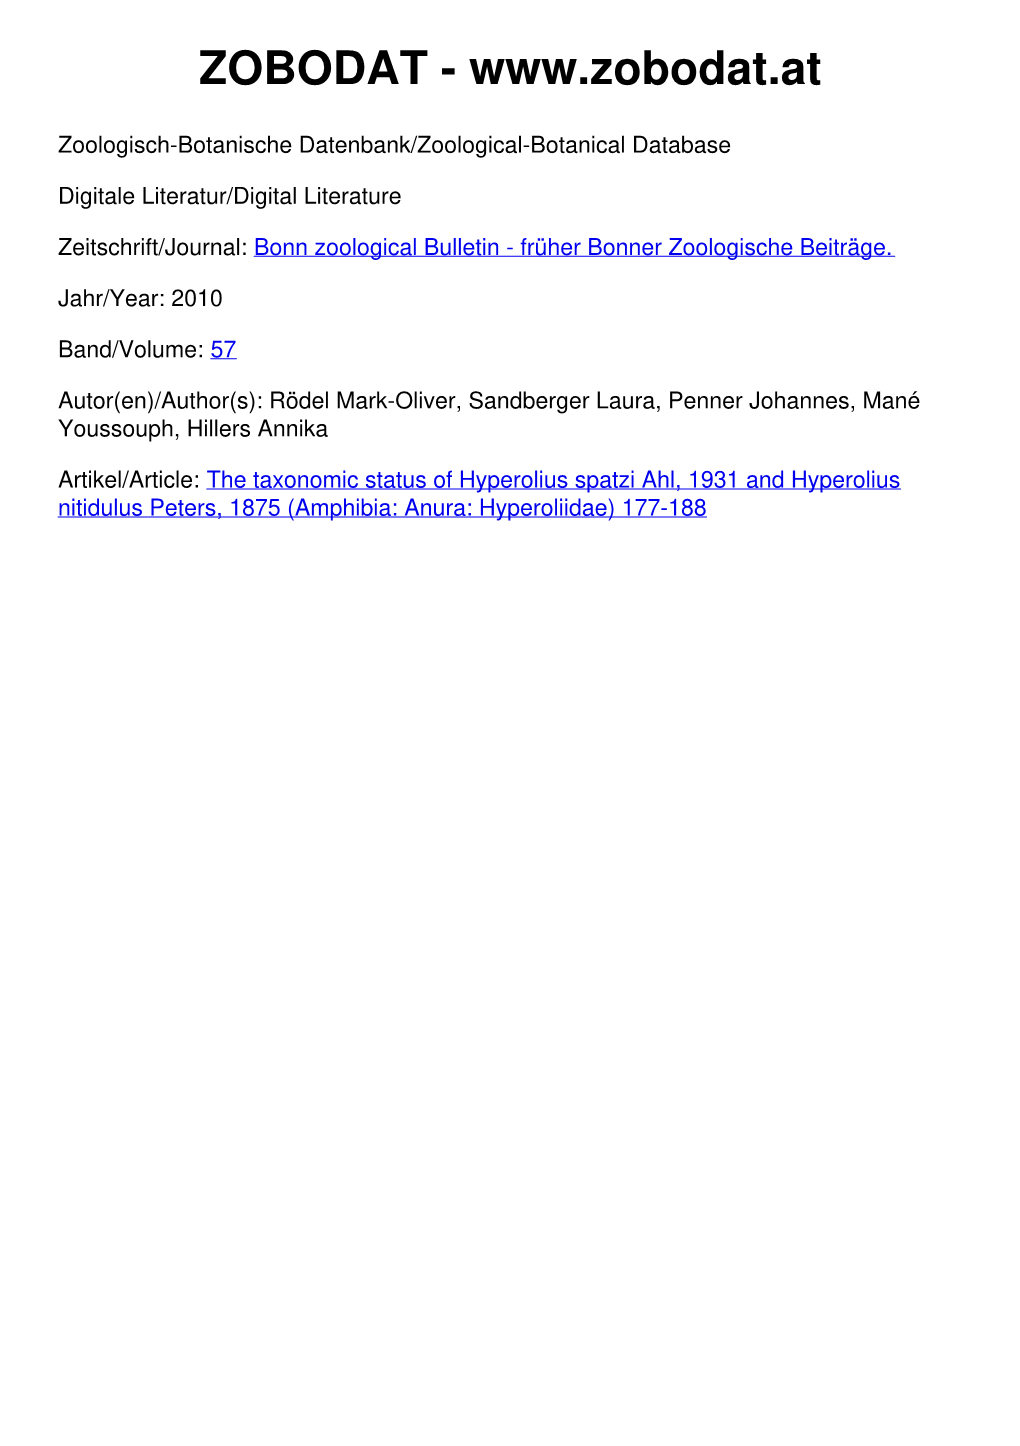 Bonn Zoological Bulletin - Früher Bonner Zoologische Beiträge